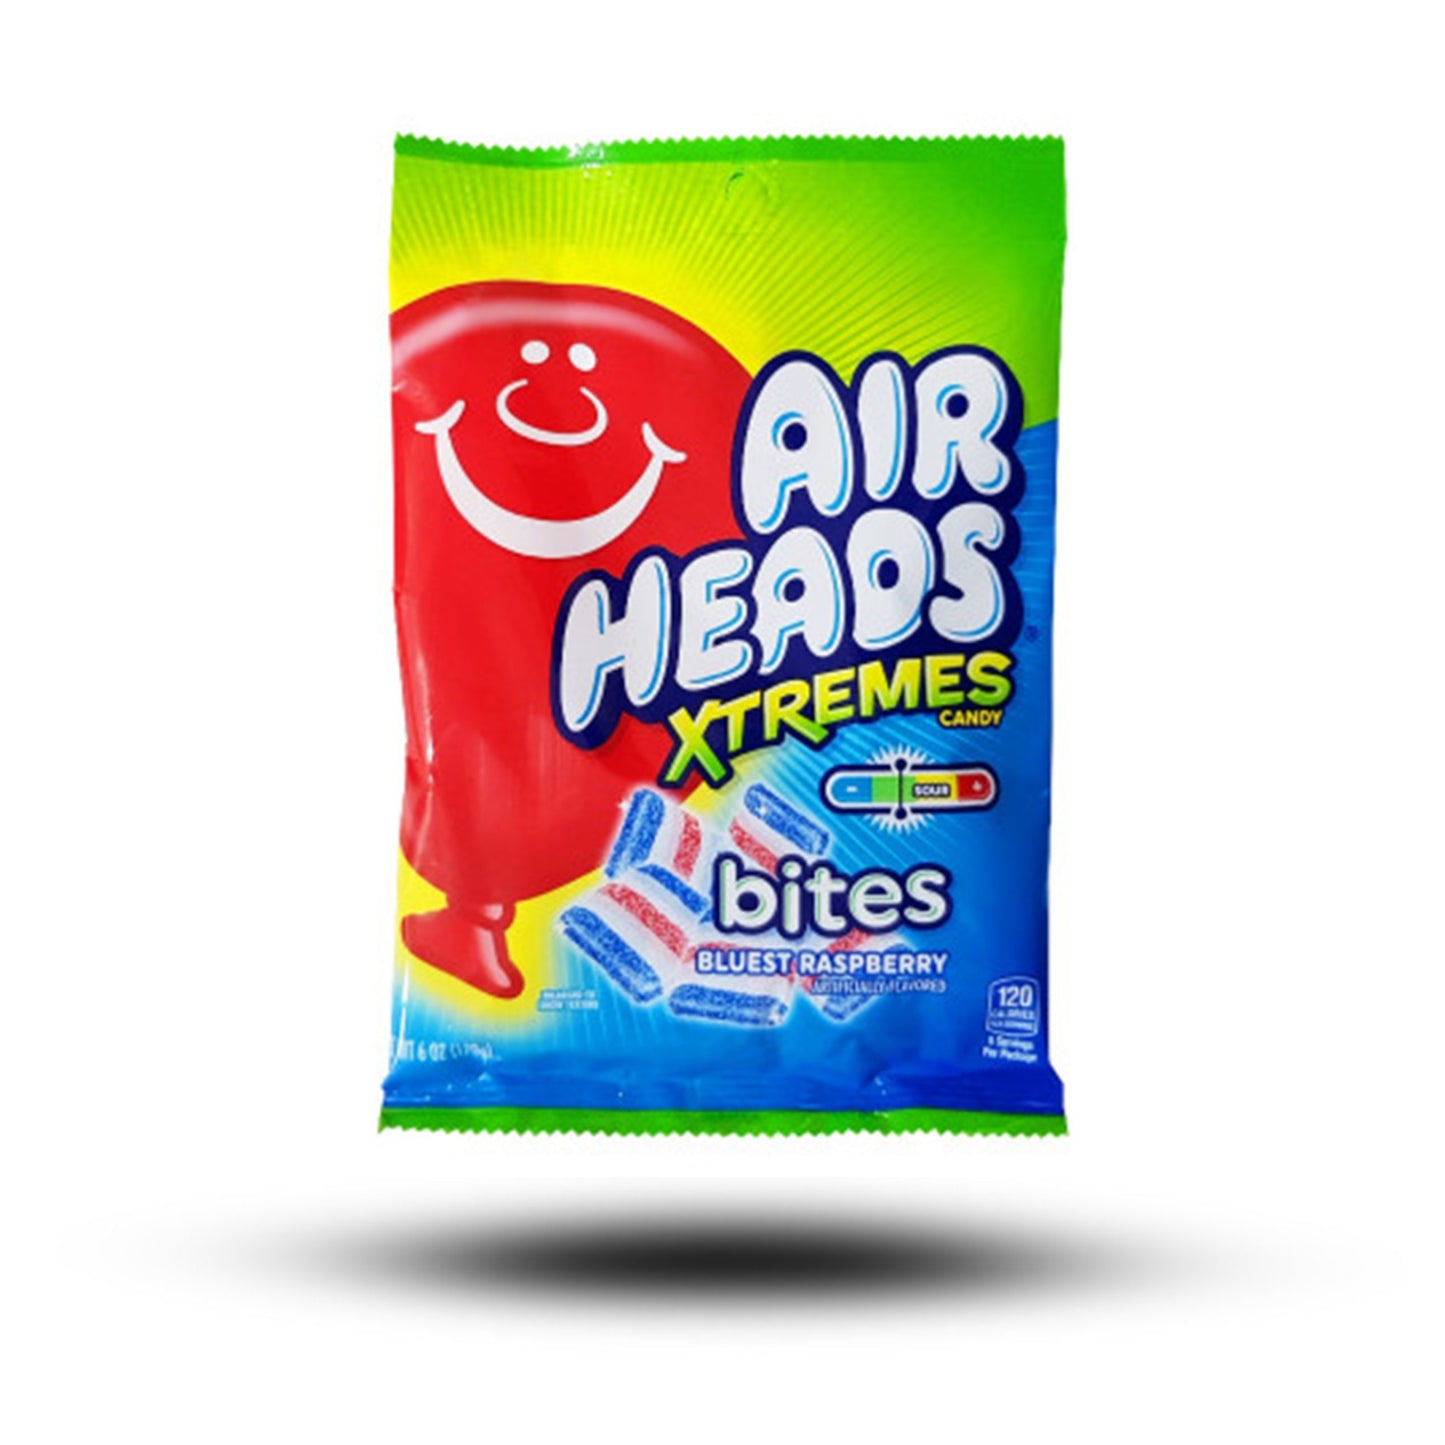 Airheads Xtremes Bites Bluest Raspberry | 12 x 170g